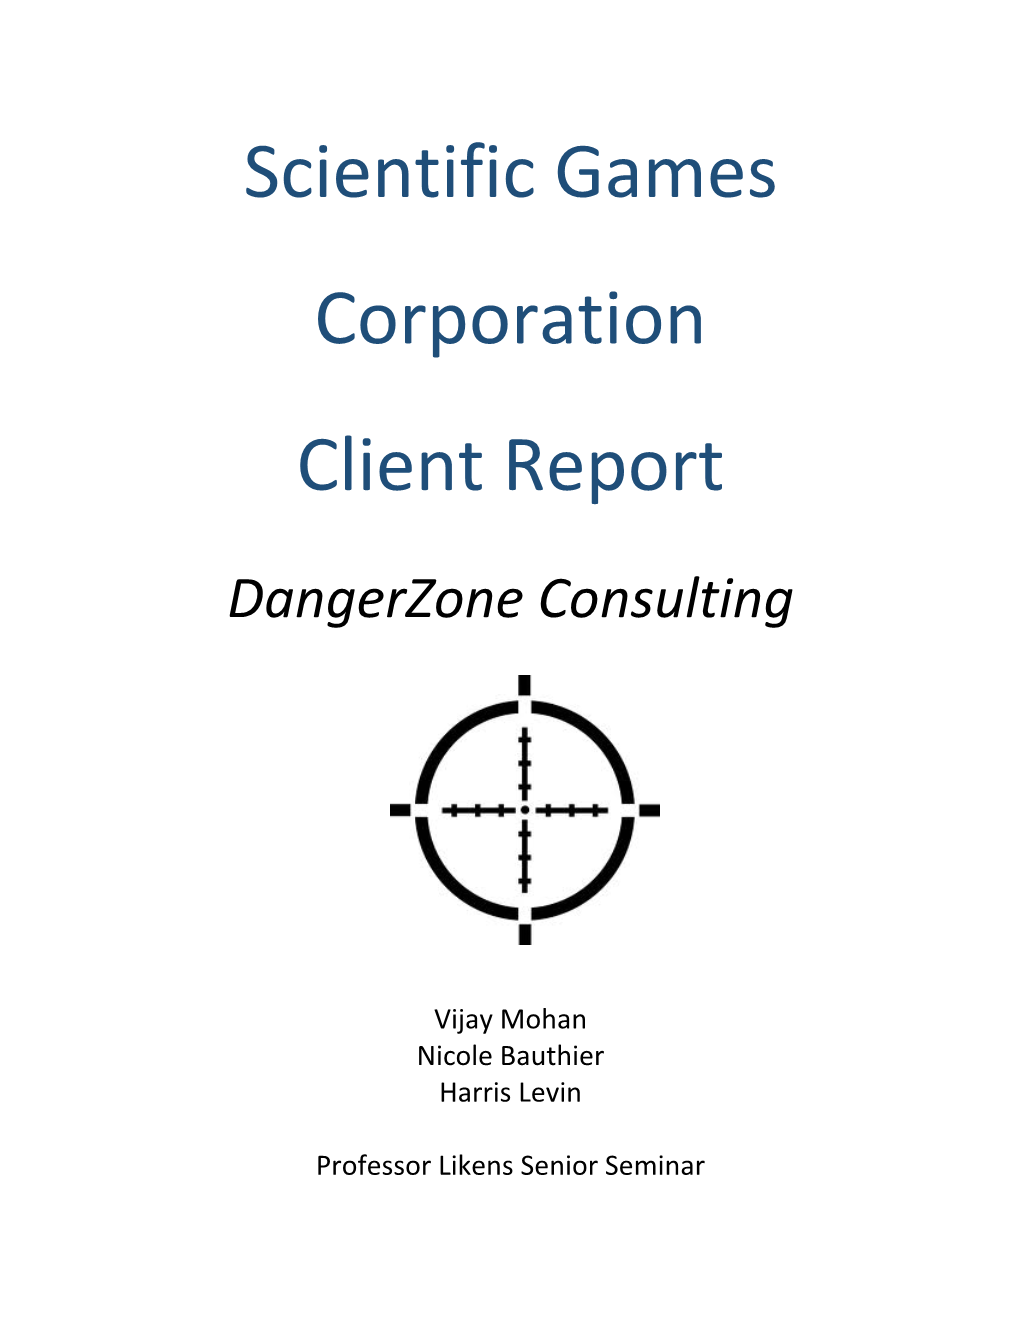 Scientific Games Corporation Client Report Dangerzone Consulting